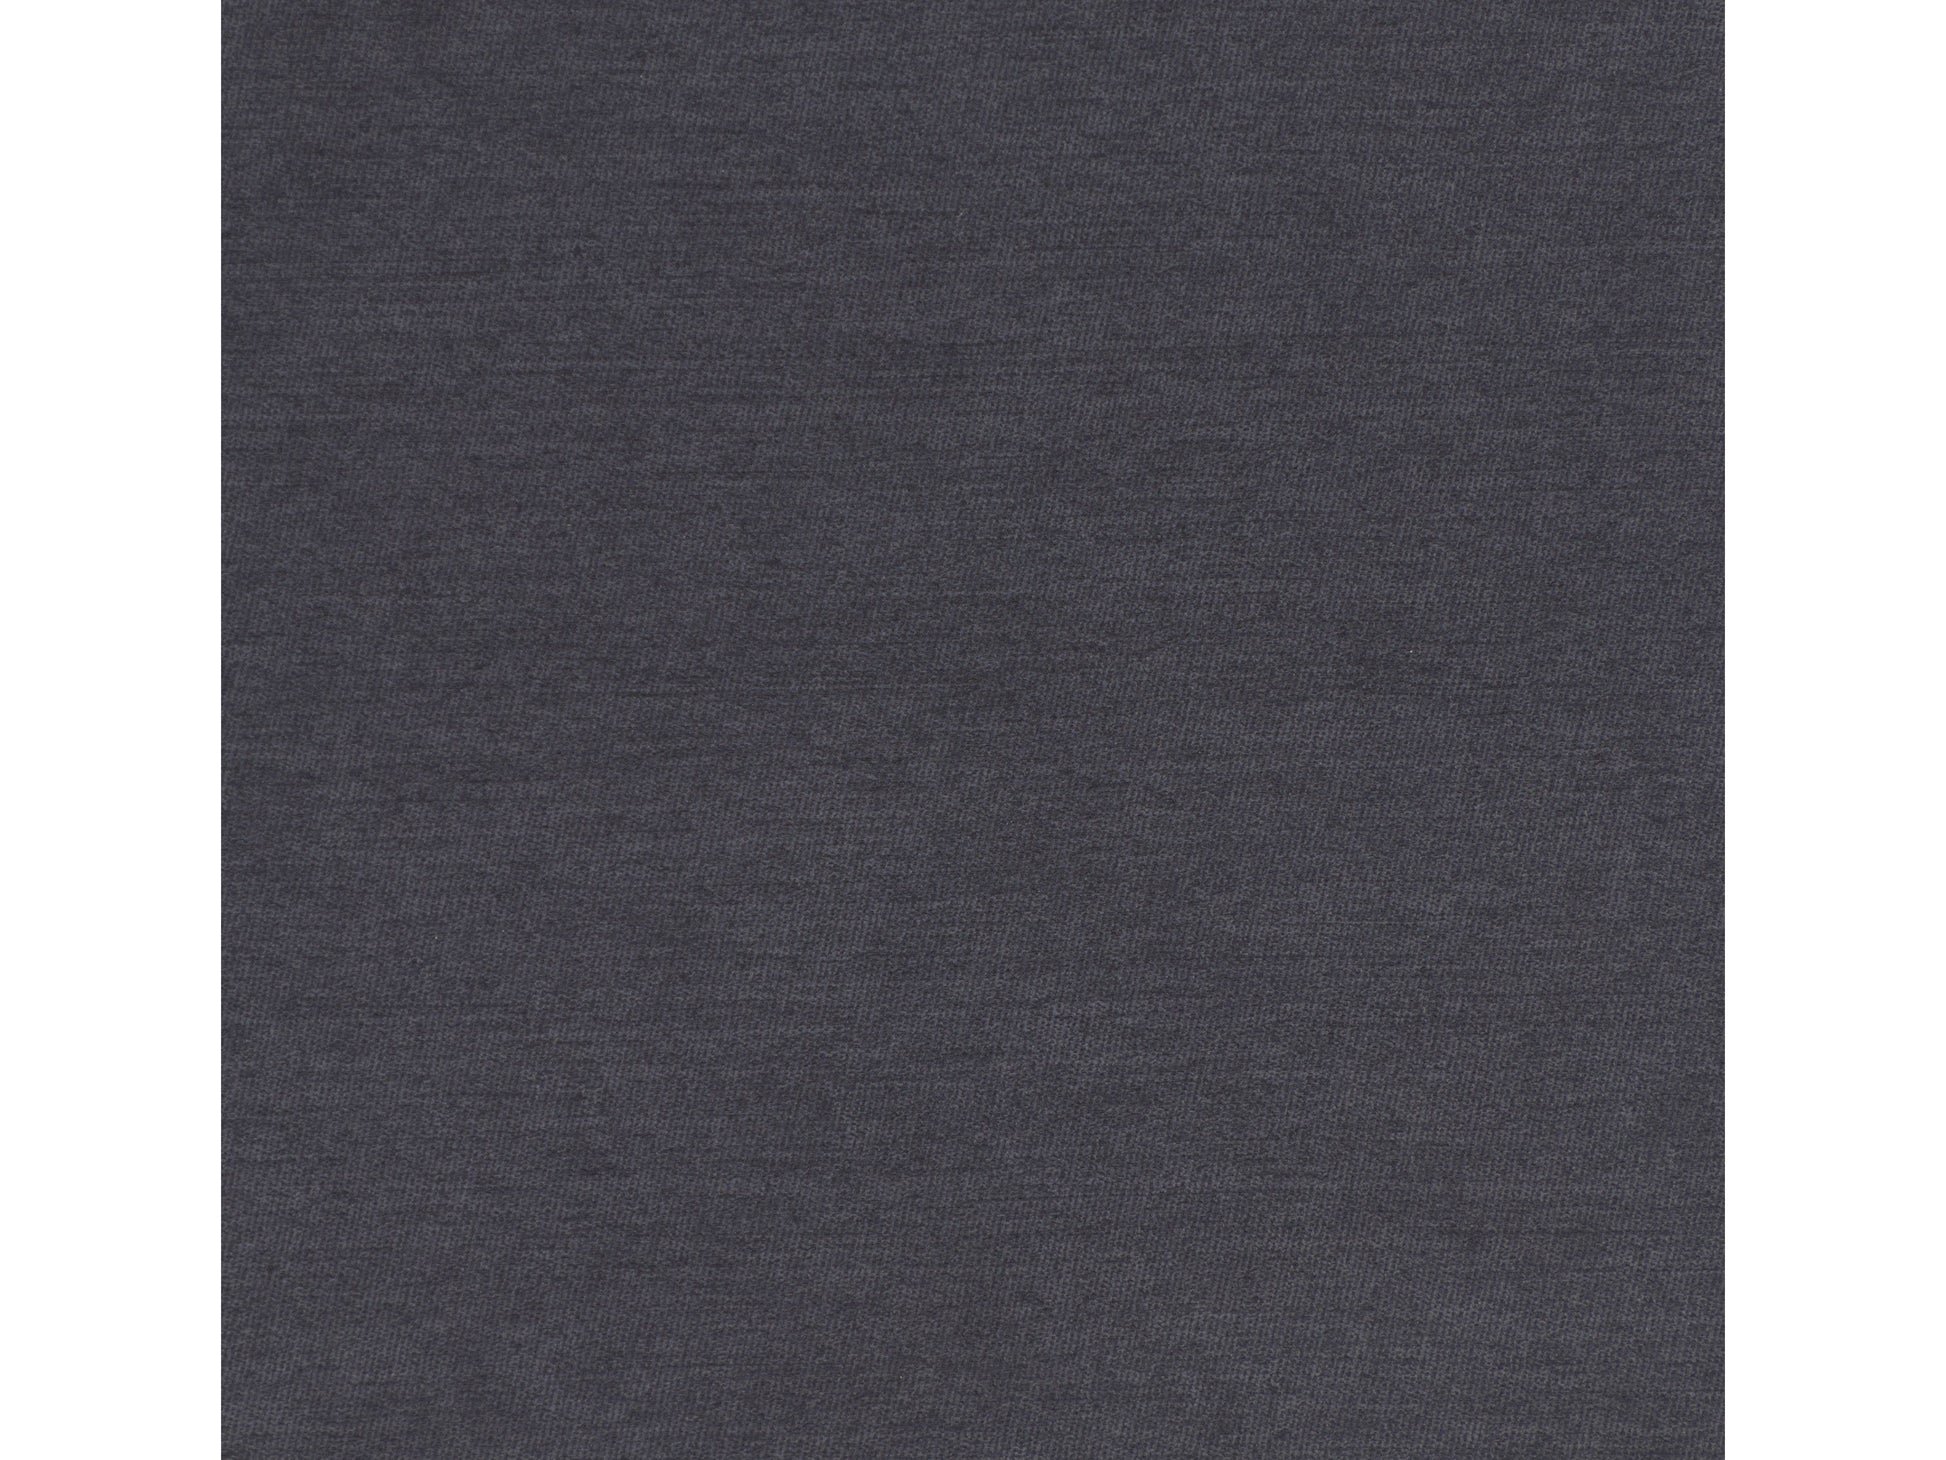 dark grey 3 Seater Sofa Caroline collection detail image by CorLiving#color_dark-grey